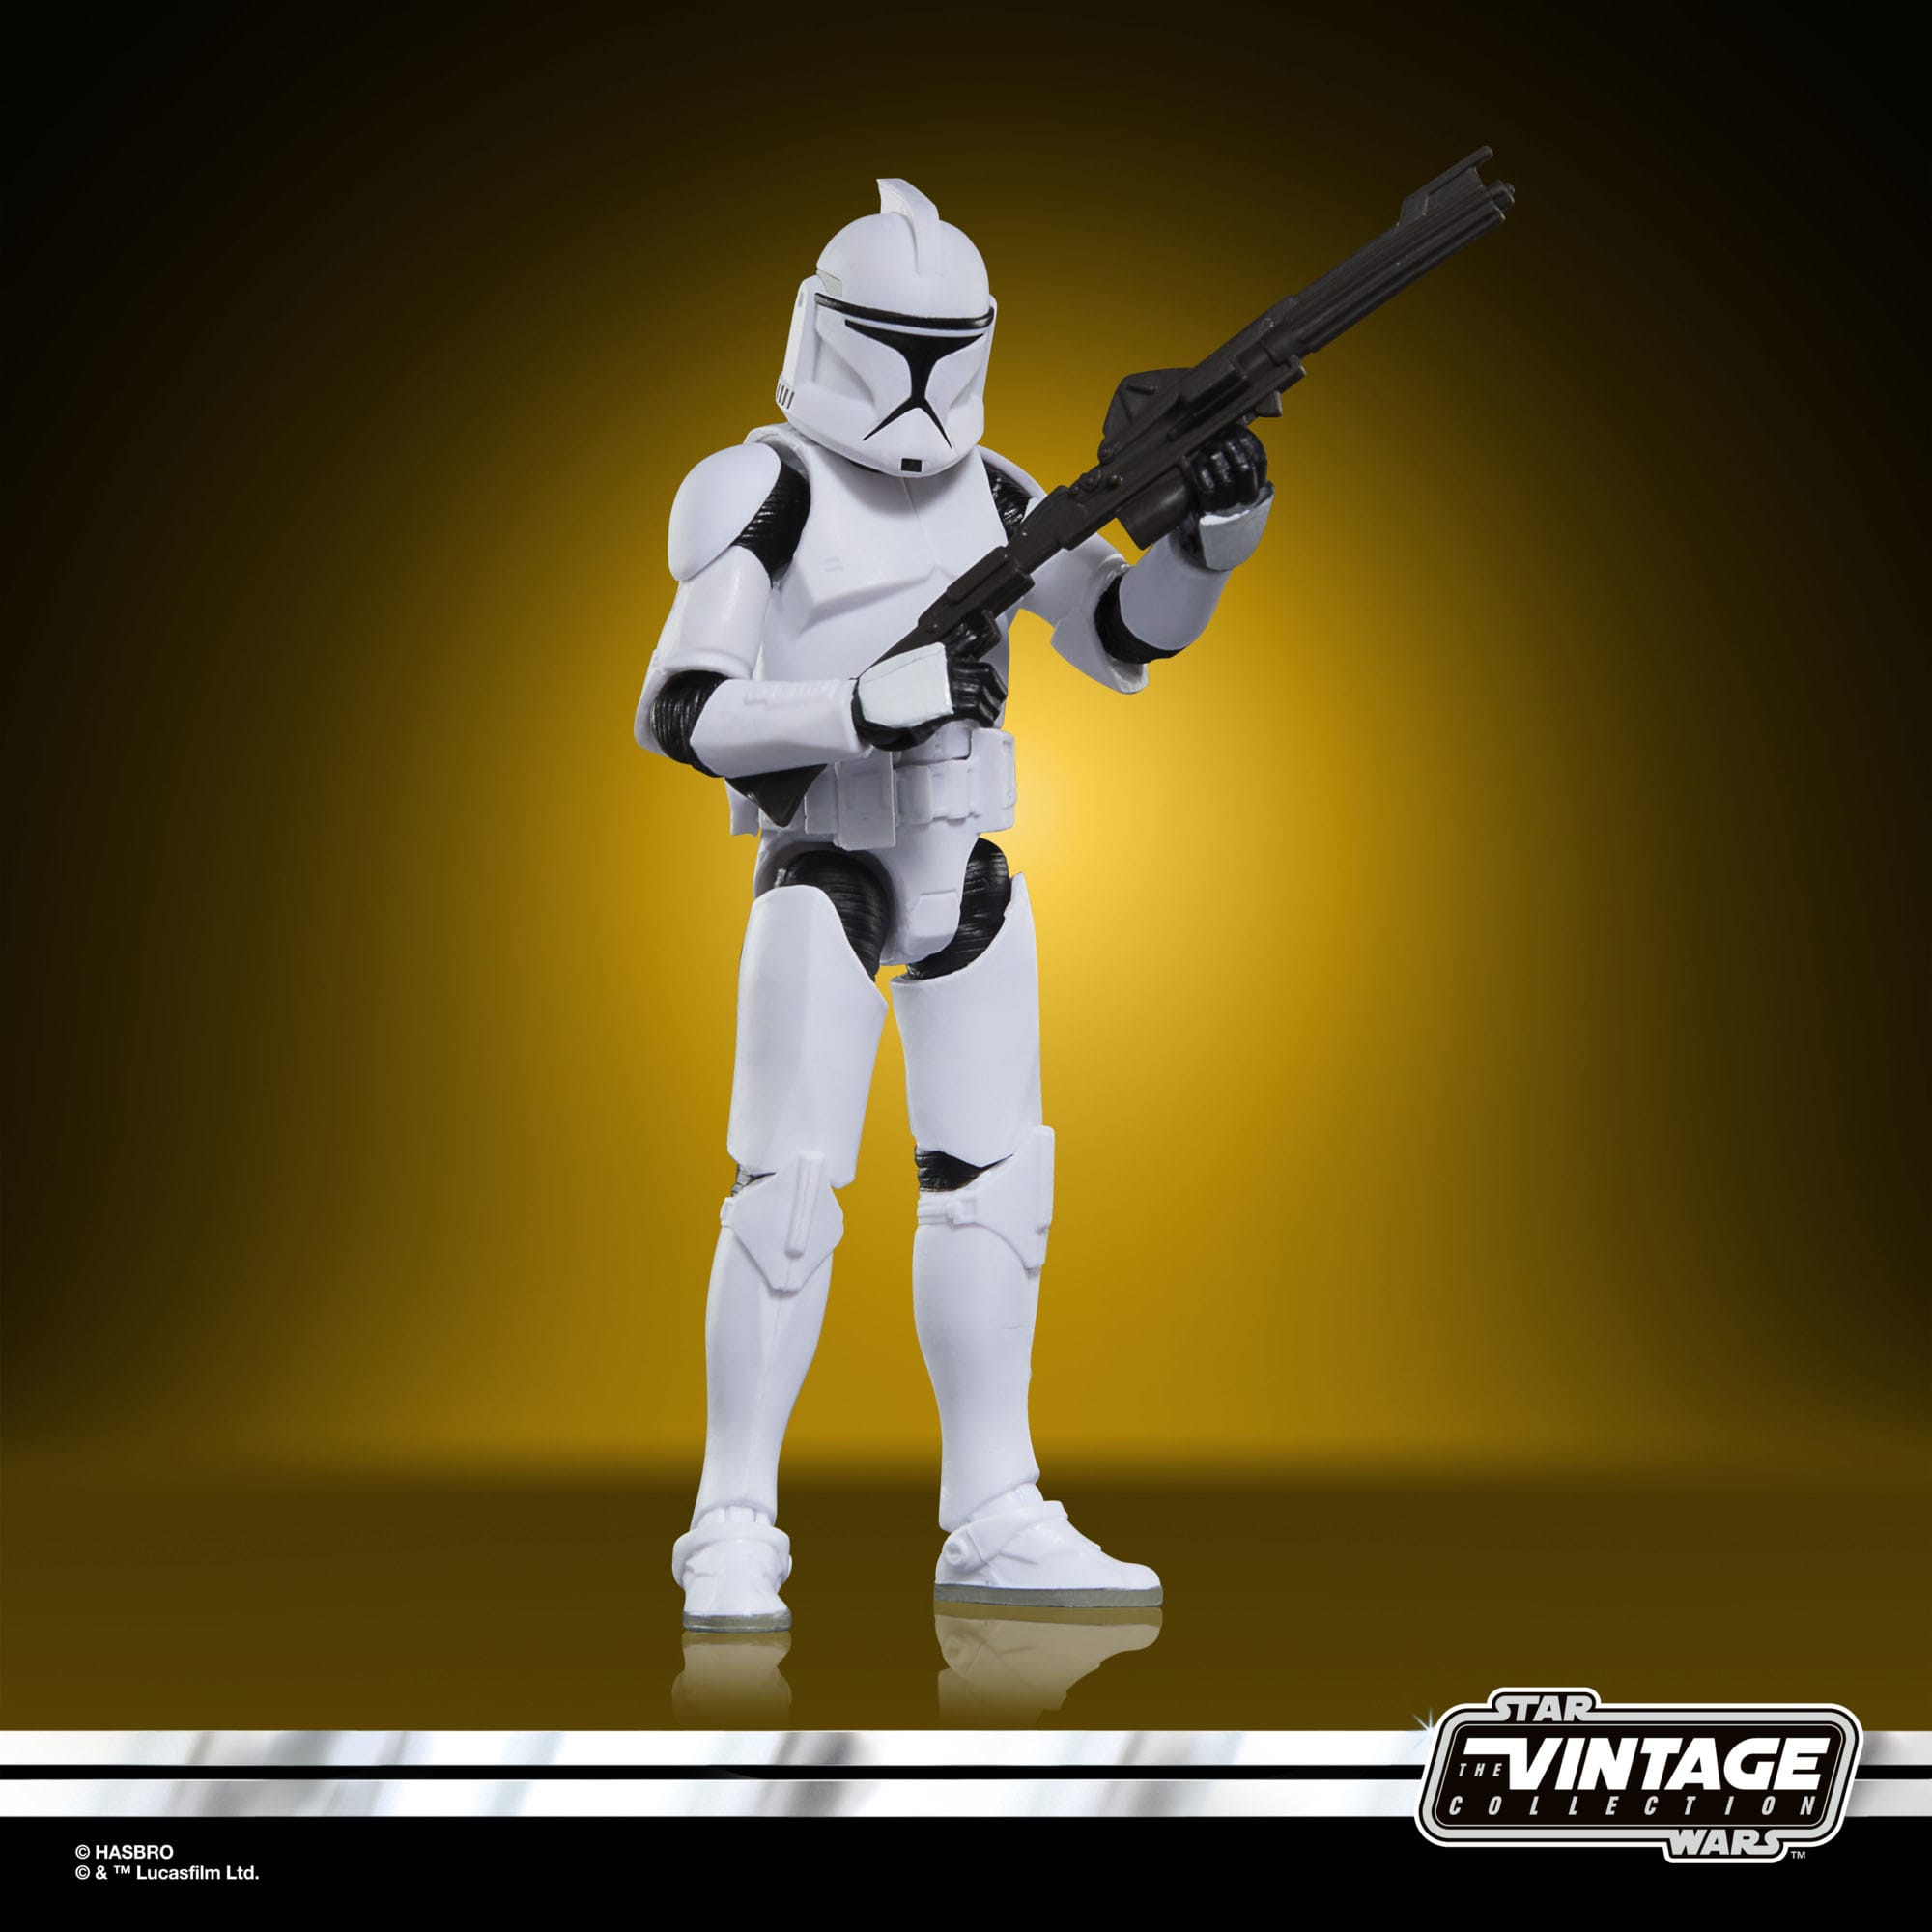 Star Wars Episode II Vintage Collection Actionfigur Phase I Clone Trooper 10 cm HASF9976 5010996202932